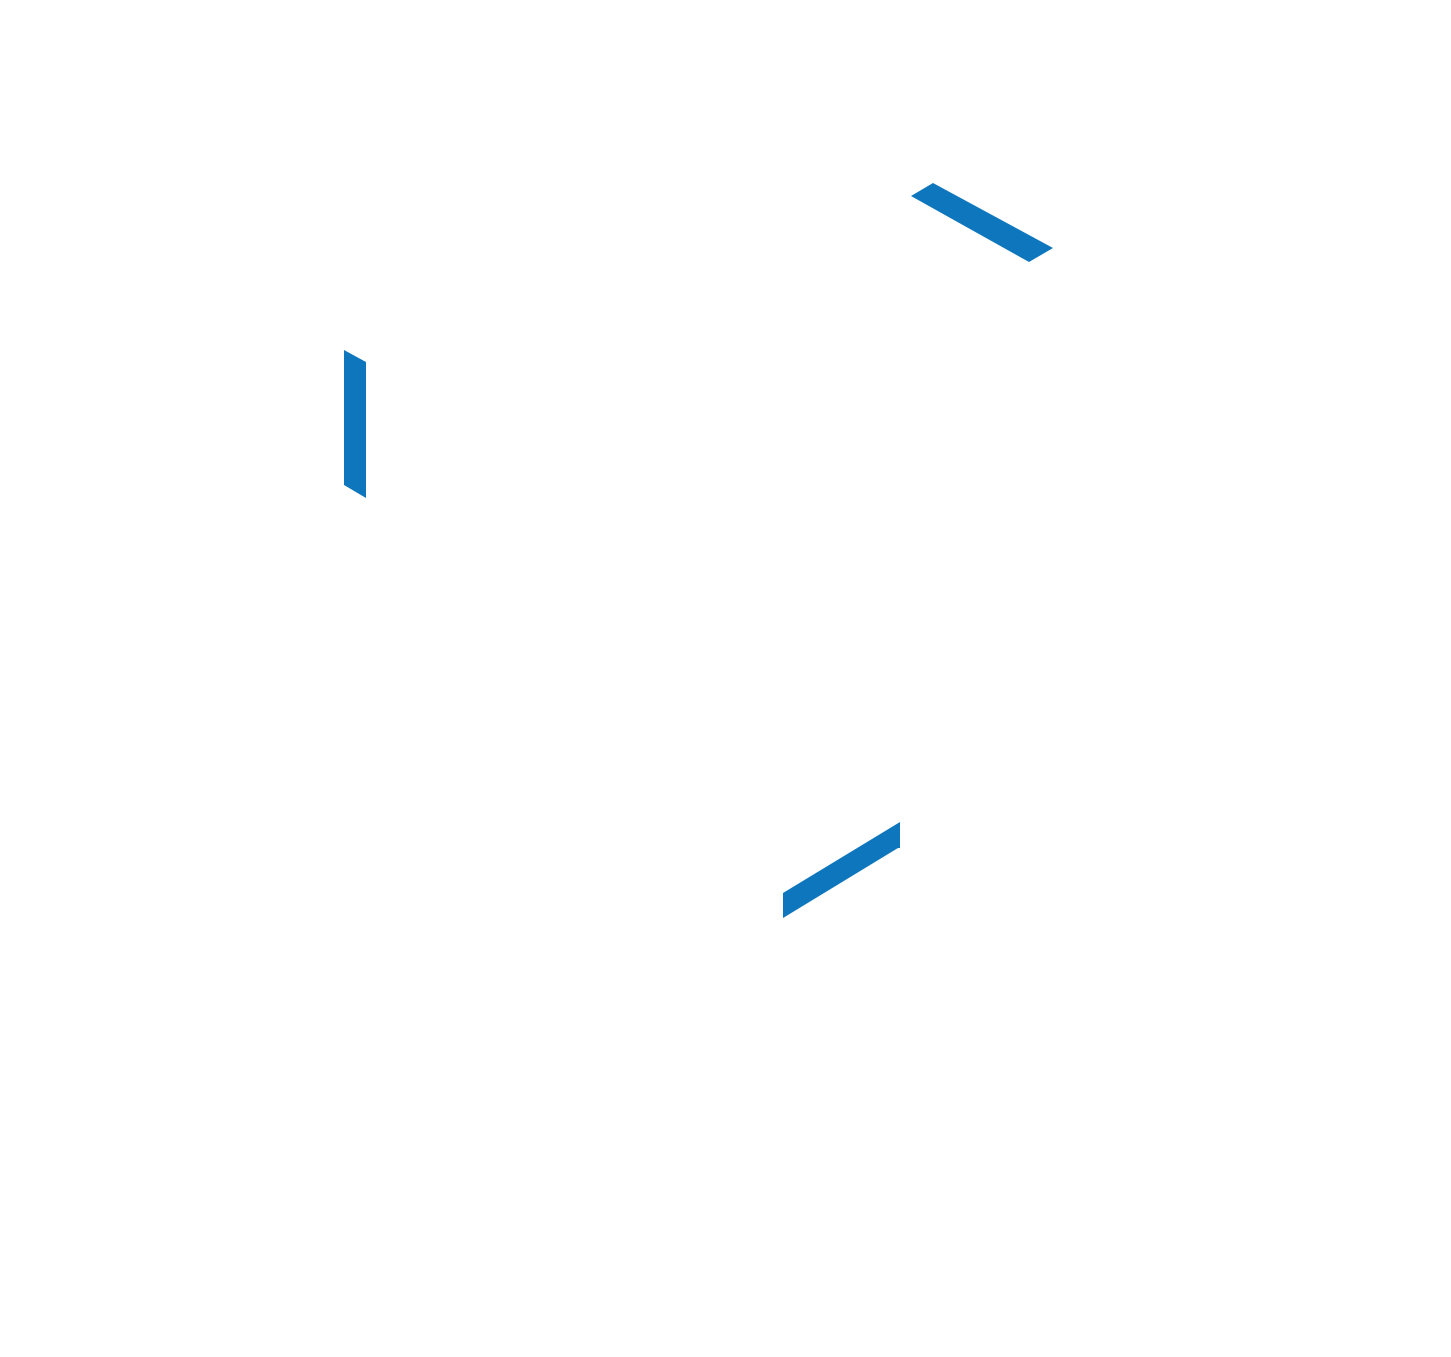 Digital Asset Financial Services – Finance Blockchain Solutions Logo